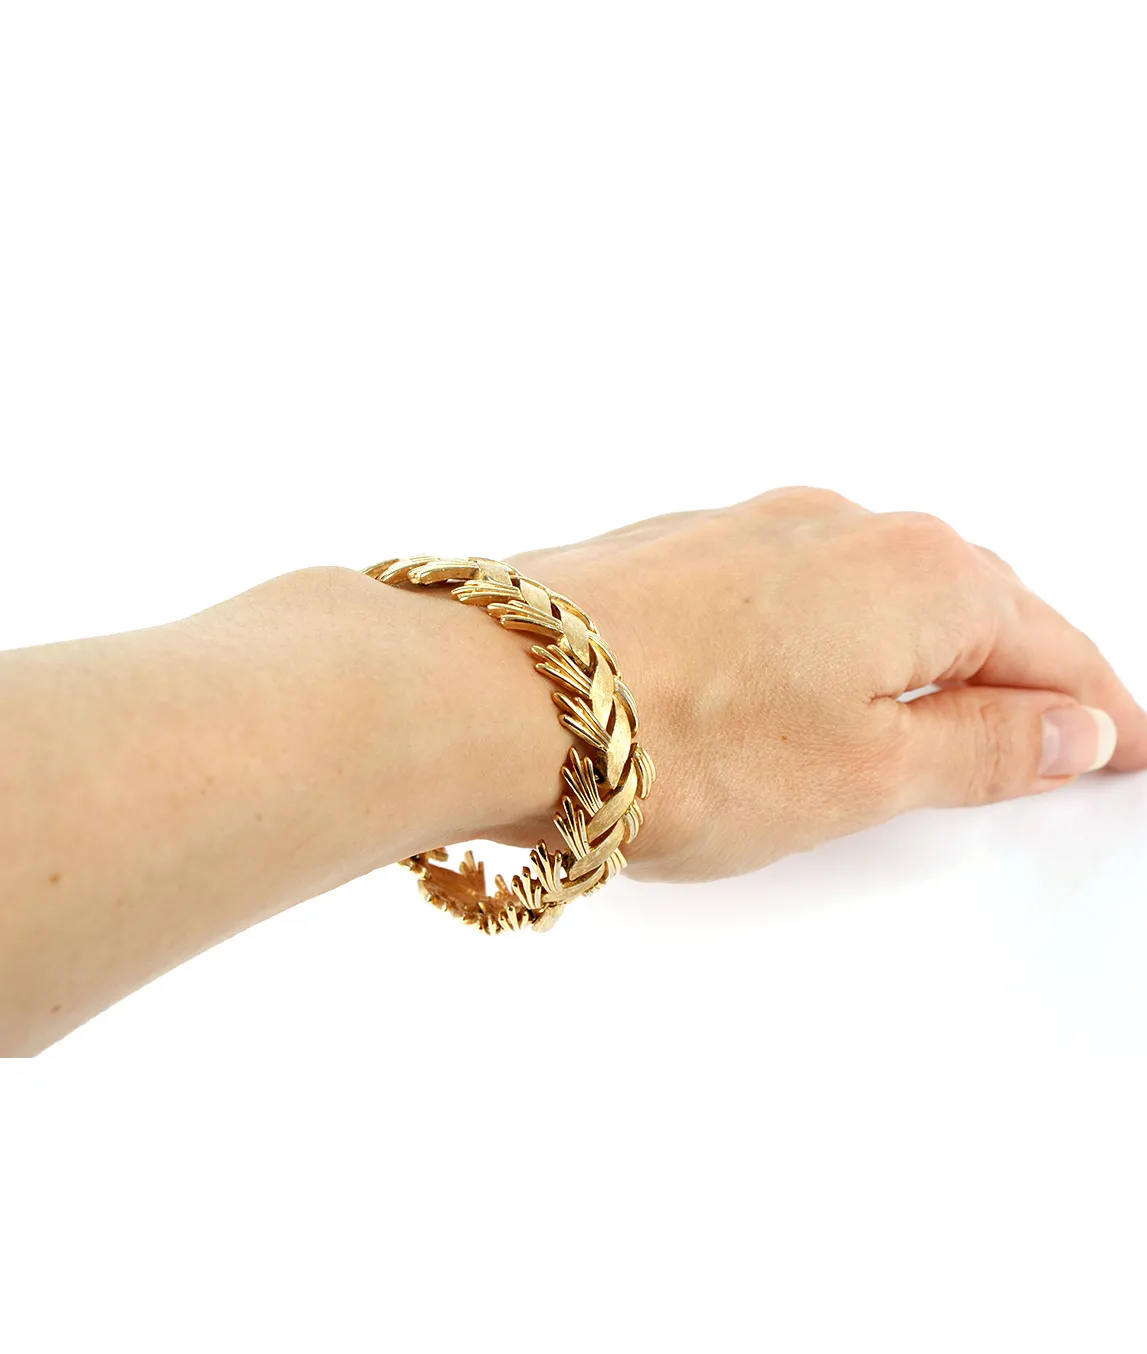 Gold Trifari bracelet on the arm